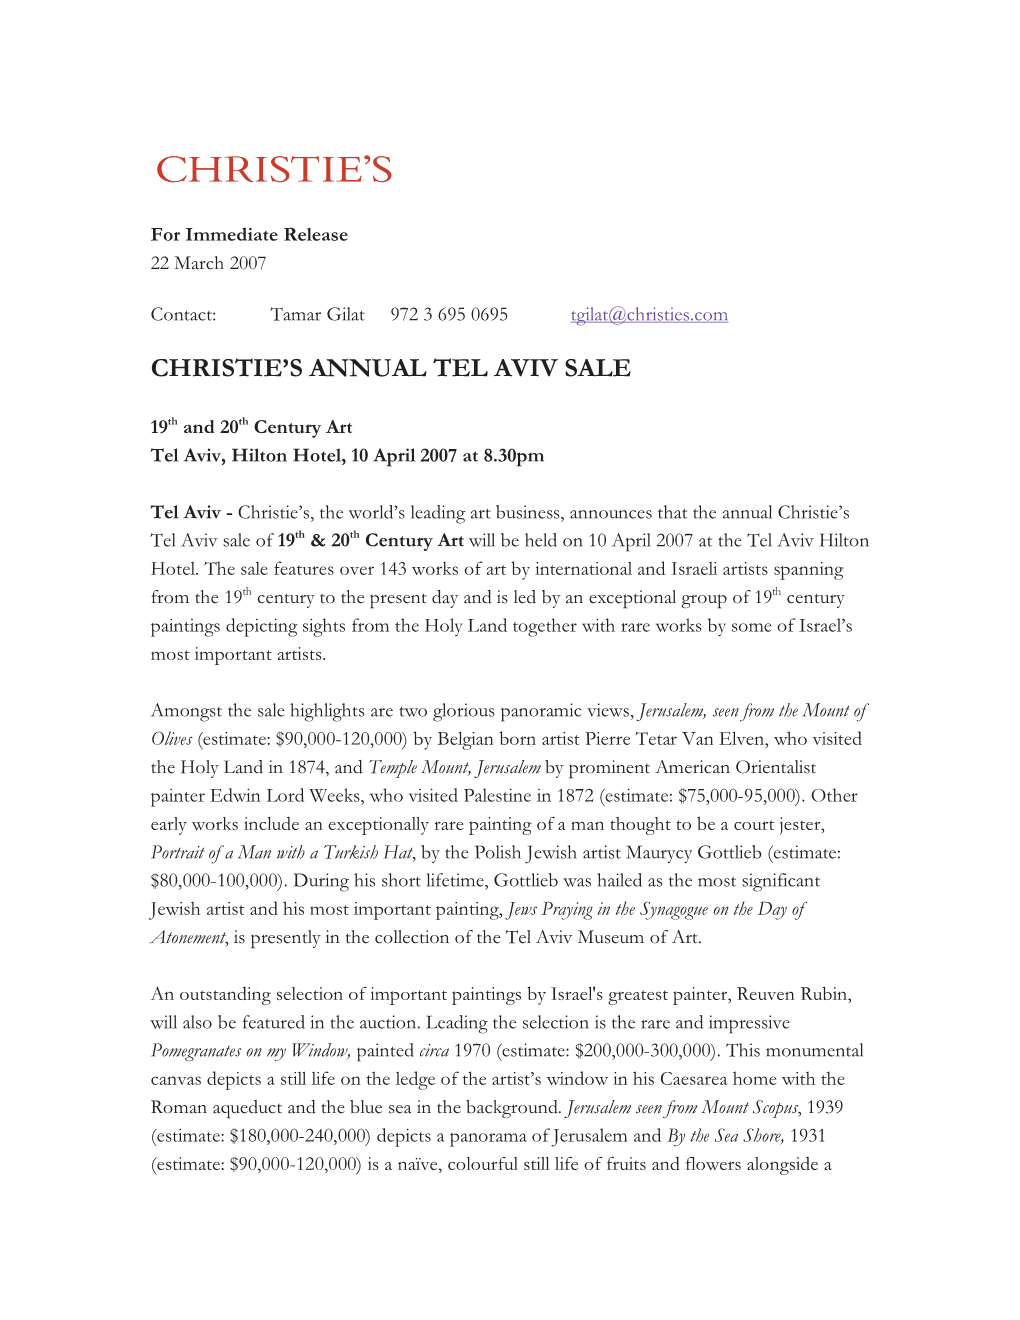 Christie's Annual Tel Aviv Sale